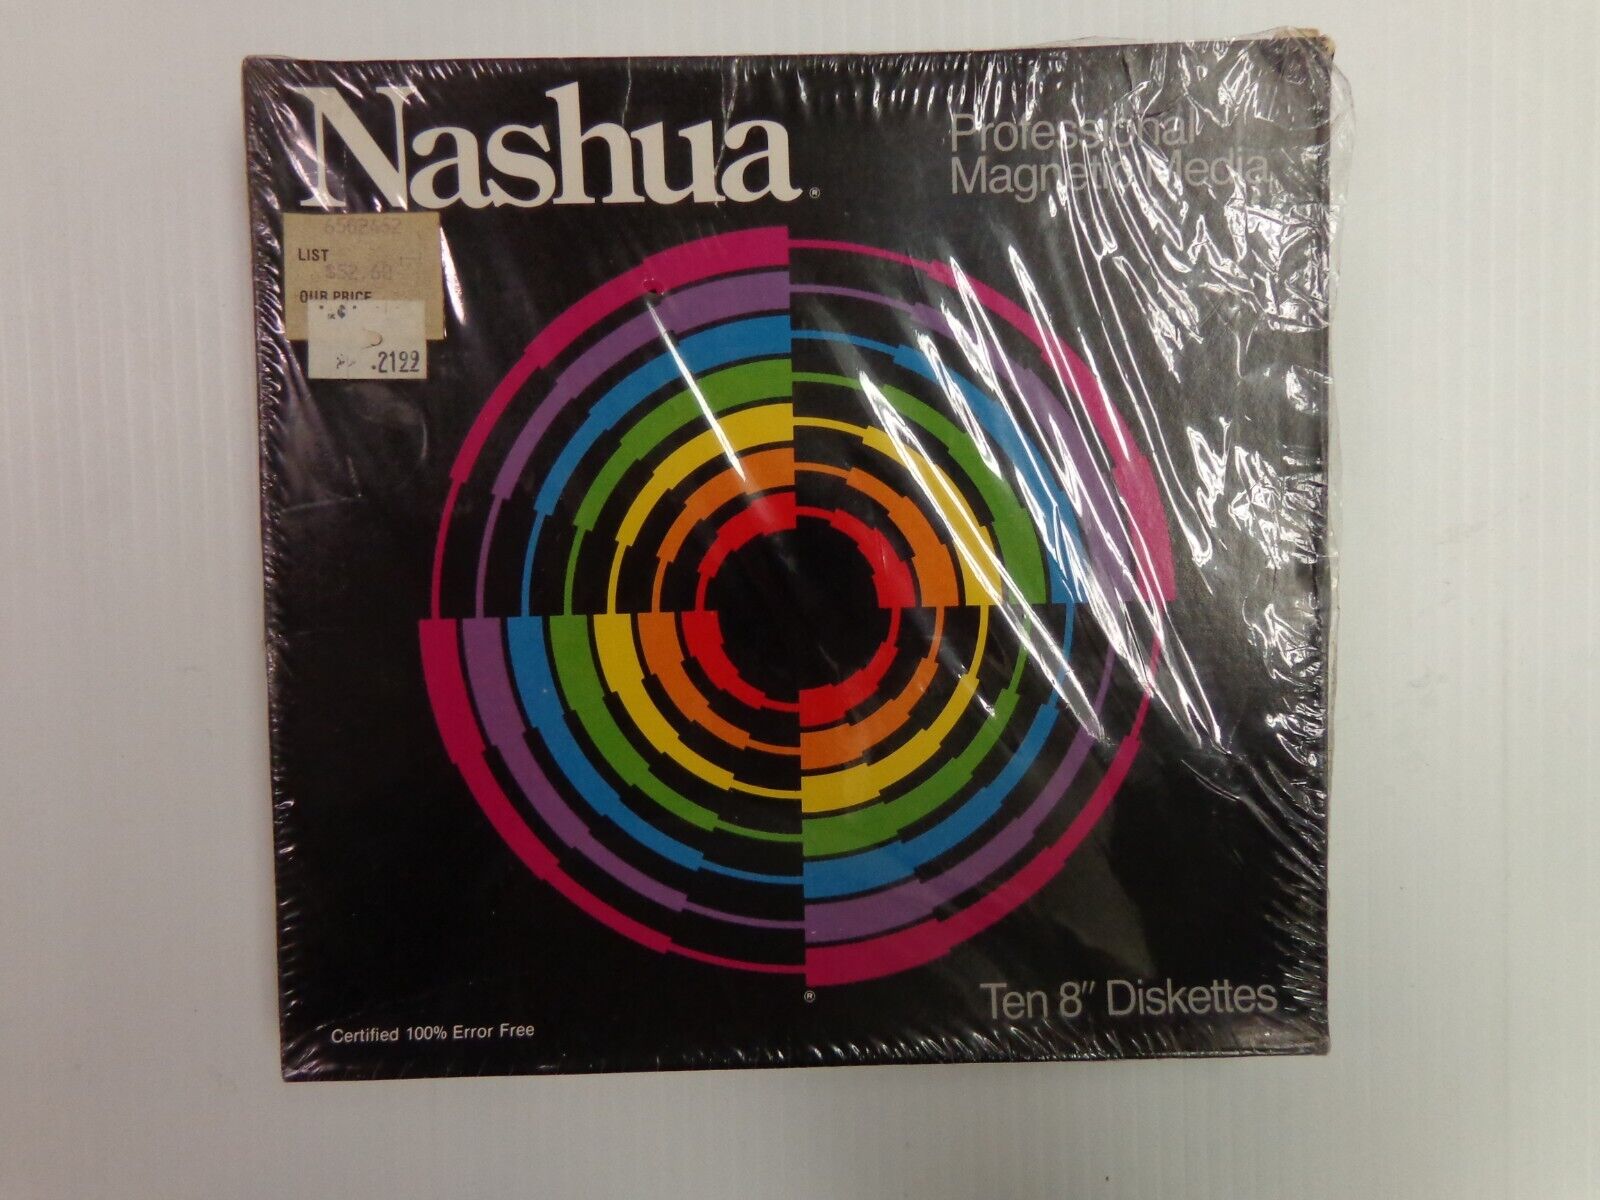 NASHUA professional magnetic media certified error free ten 8